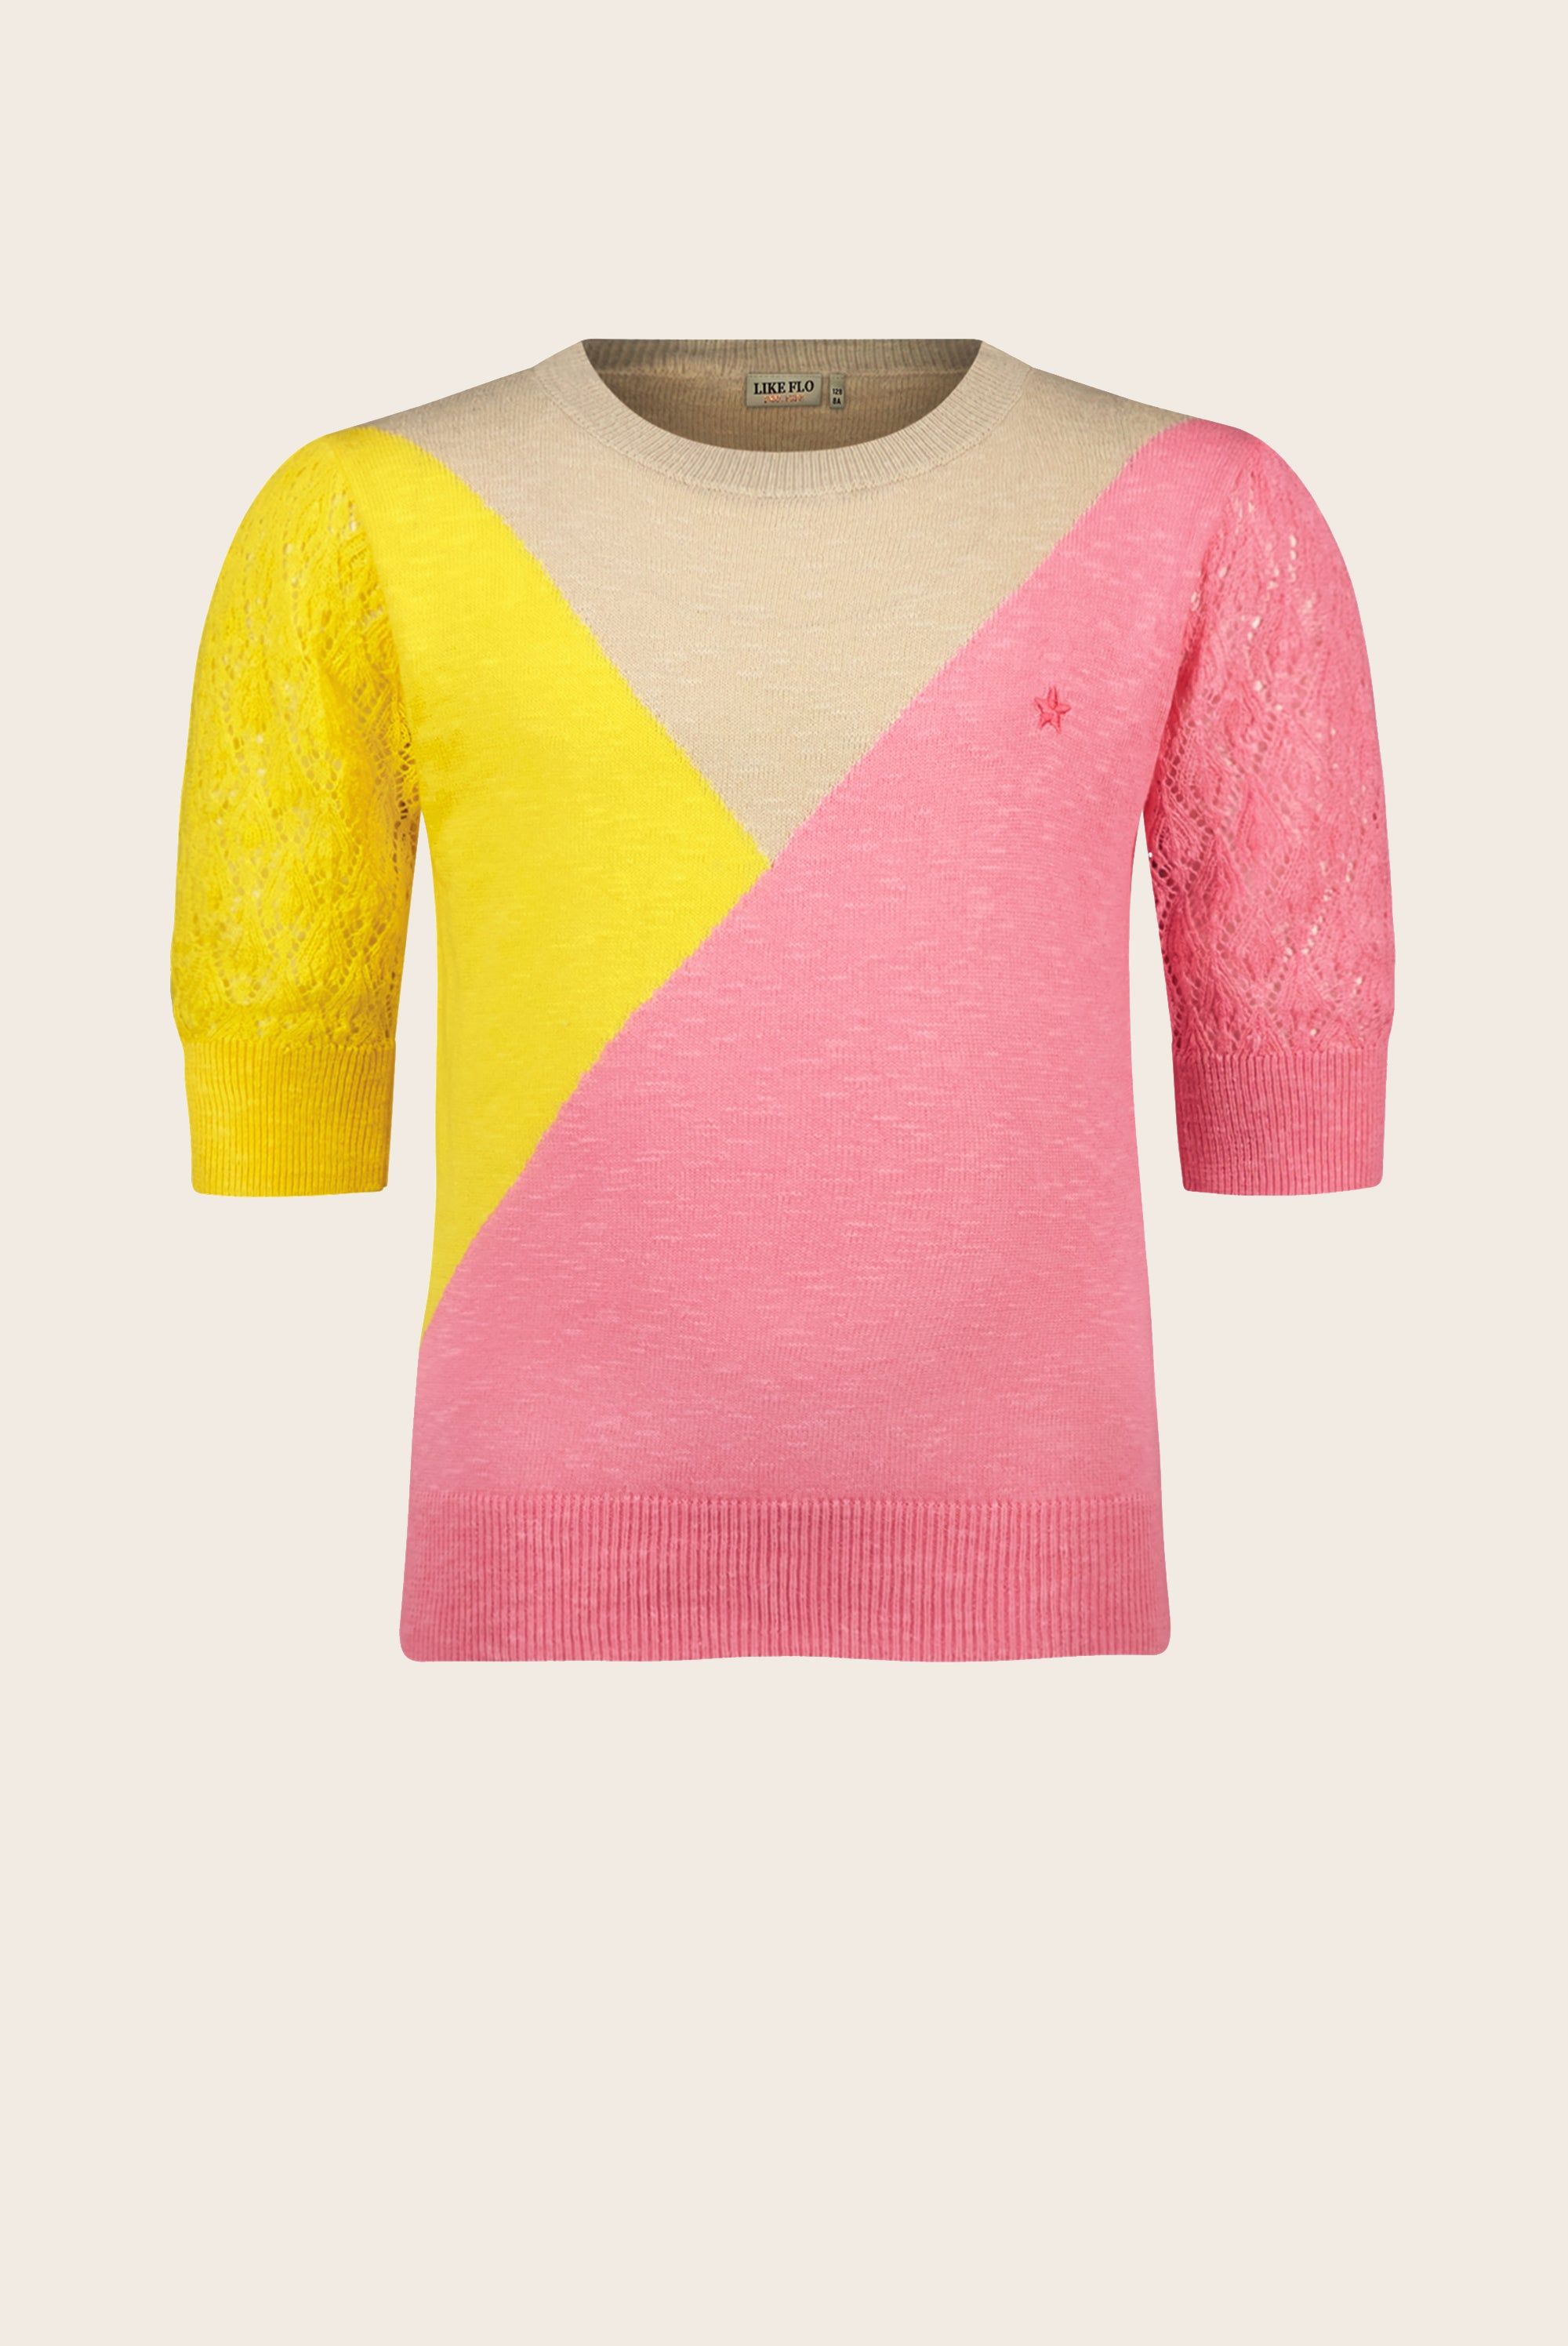 Trui / Sweater Flo girls knitted slub colourblock sweater